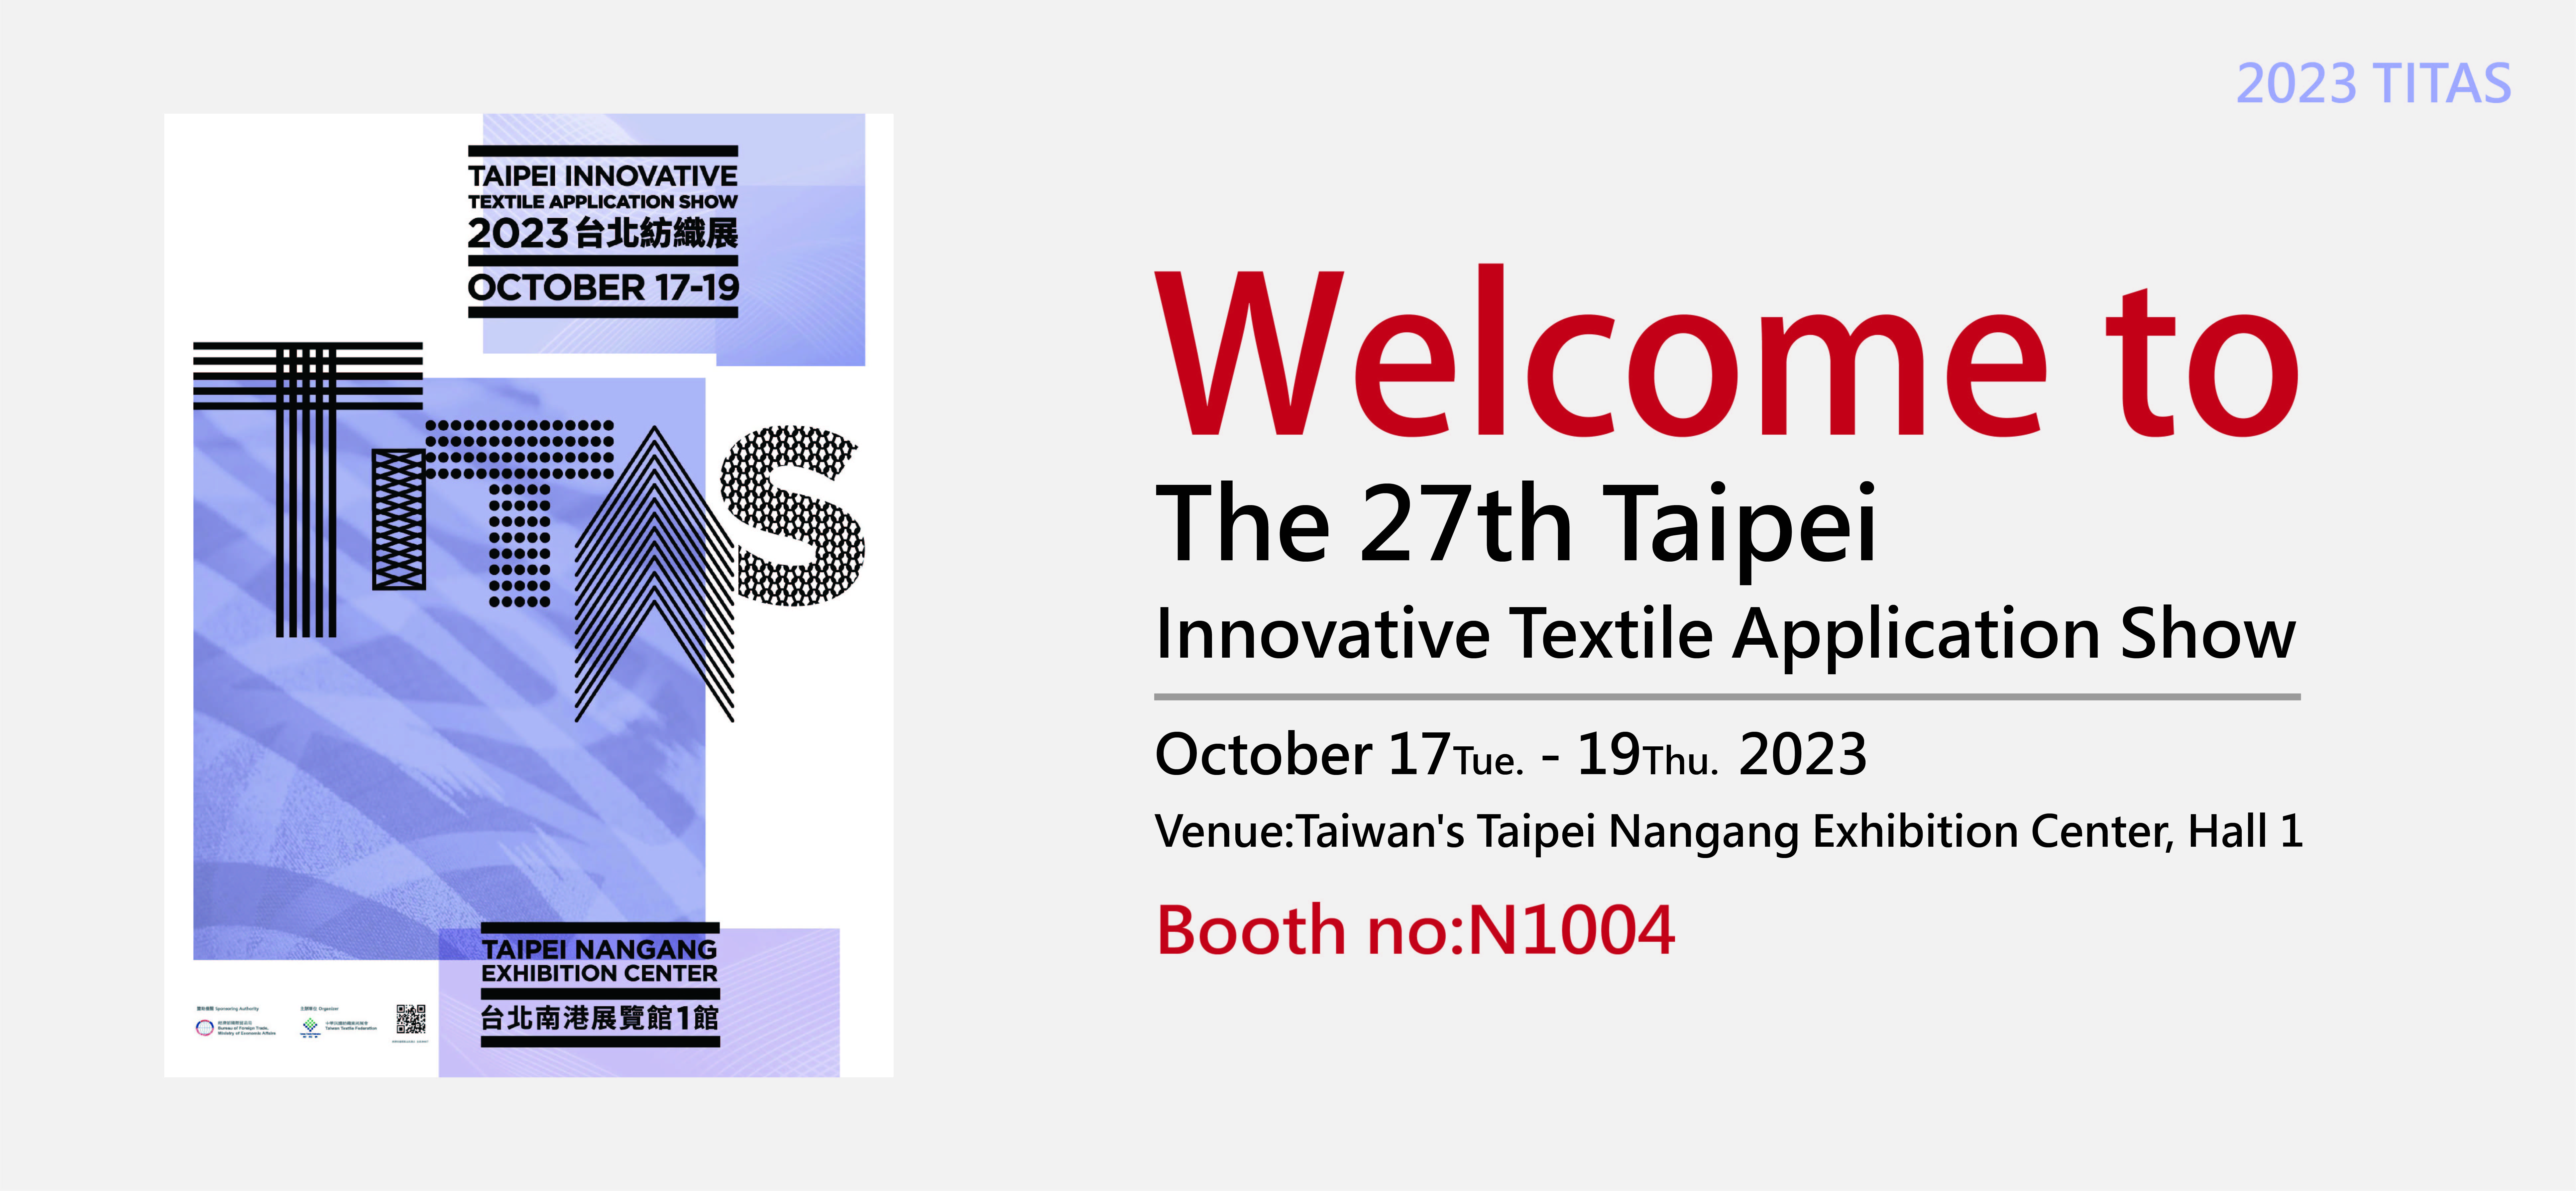 2023 Taipei Innovative Textile Application Show Invitation Card